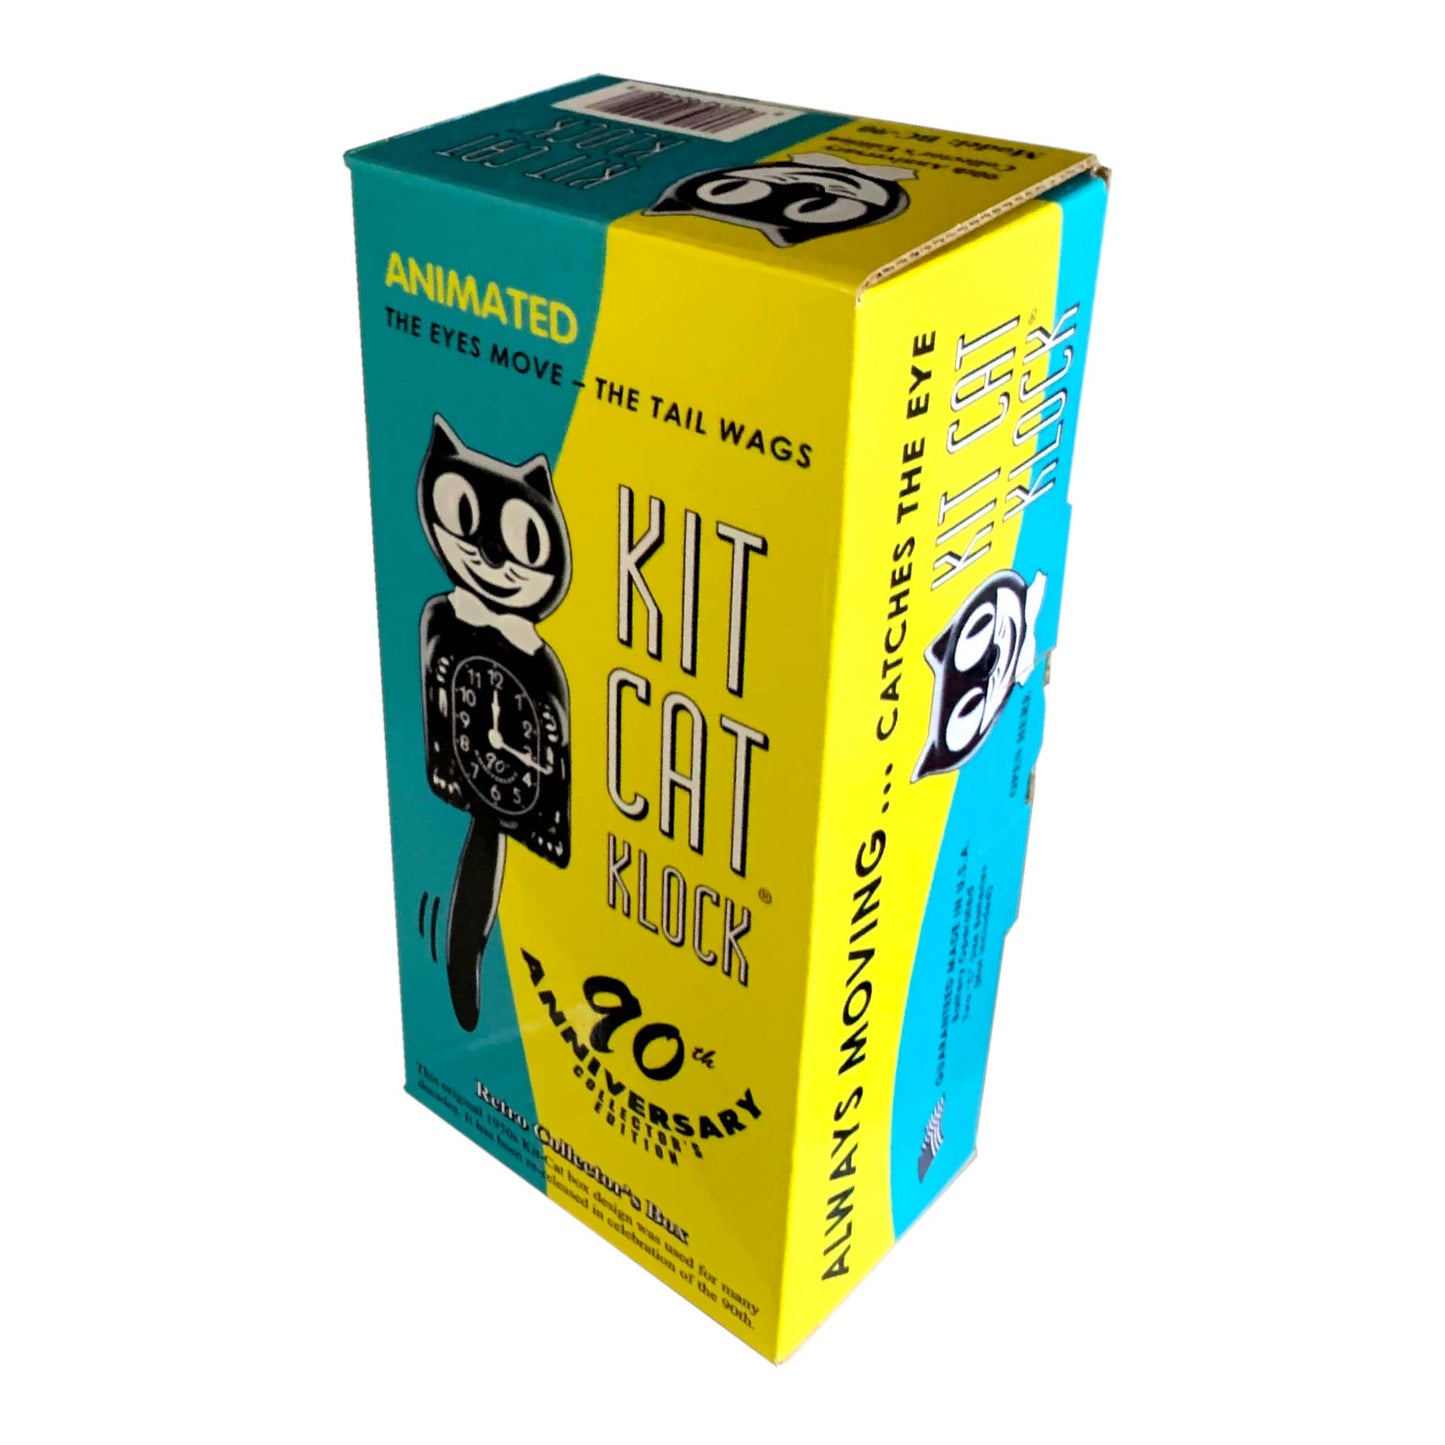 Kit Cat Klock 90th Anniversary Limited Edition - Black